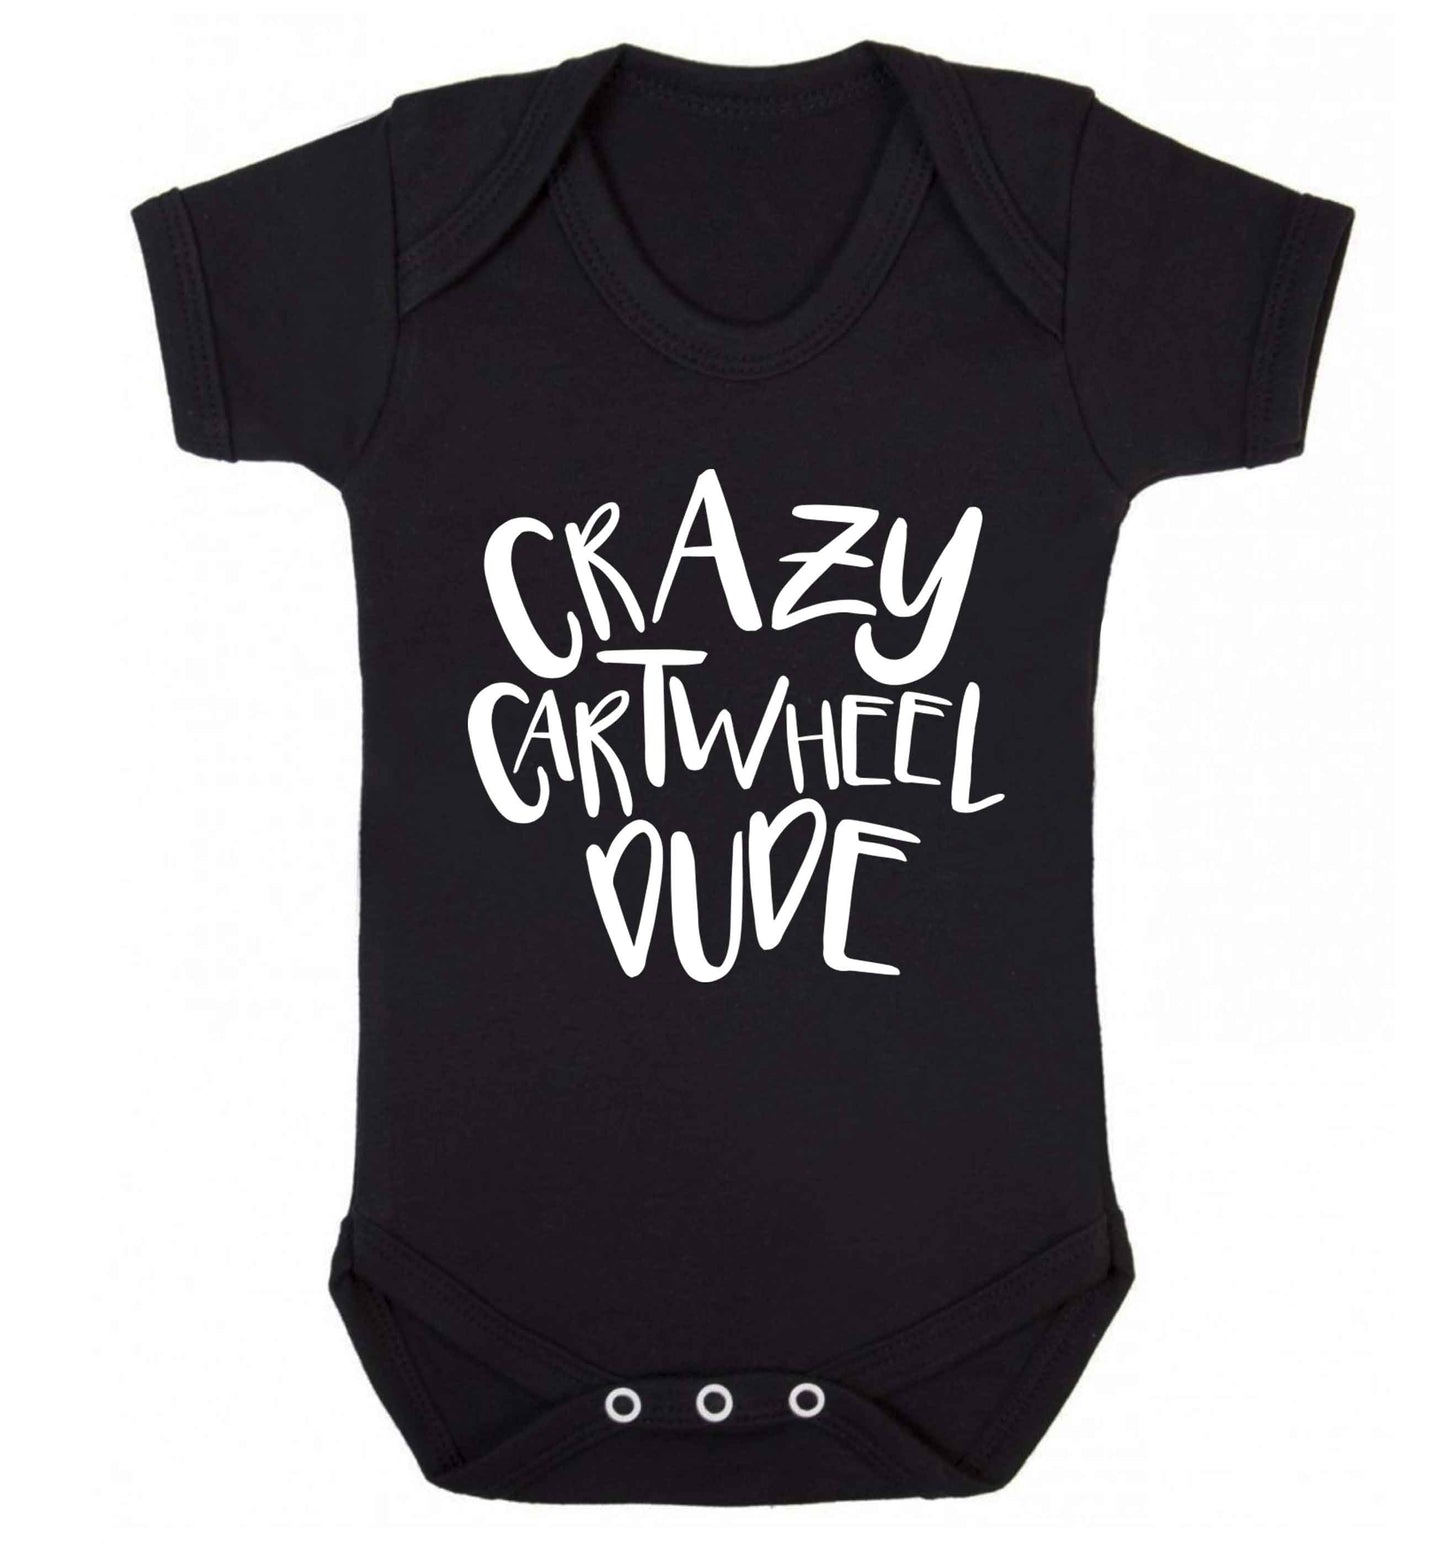 Crazy cartwheel dude Baby Vest black 18-24 months